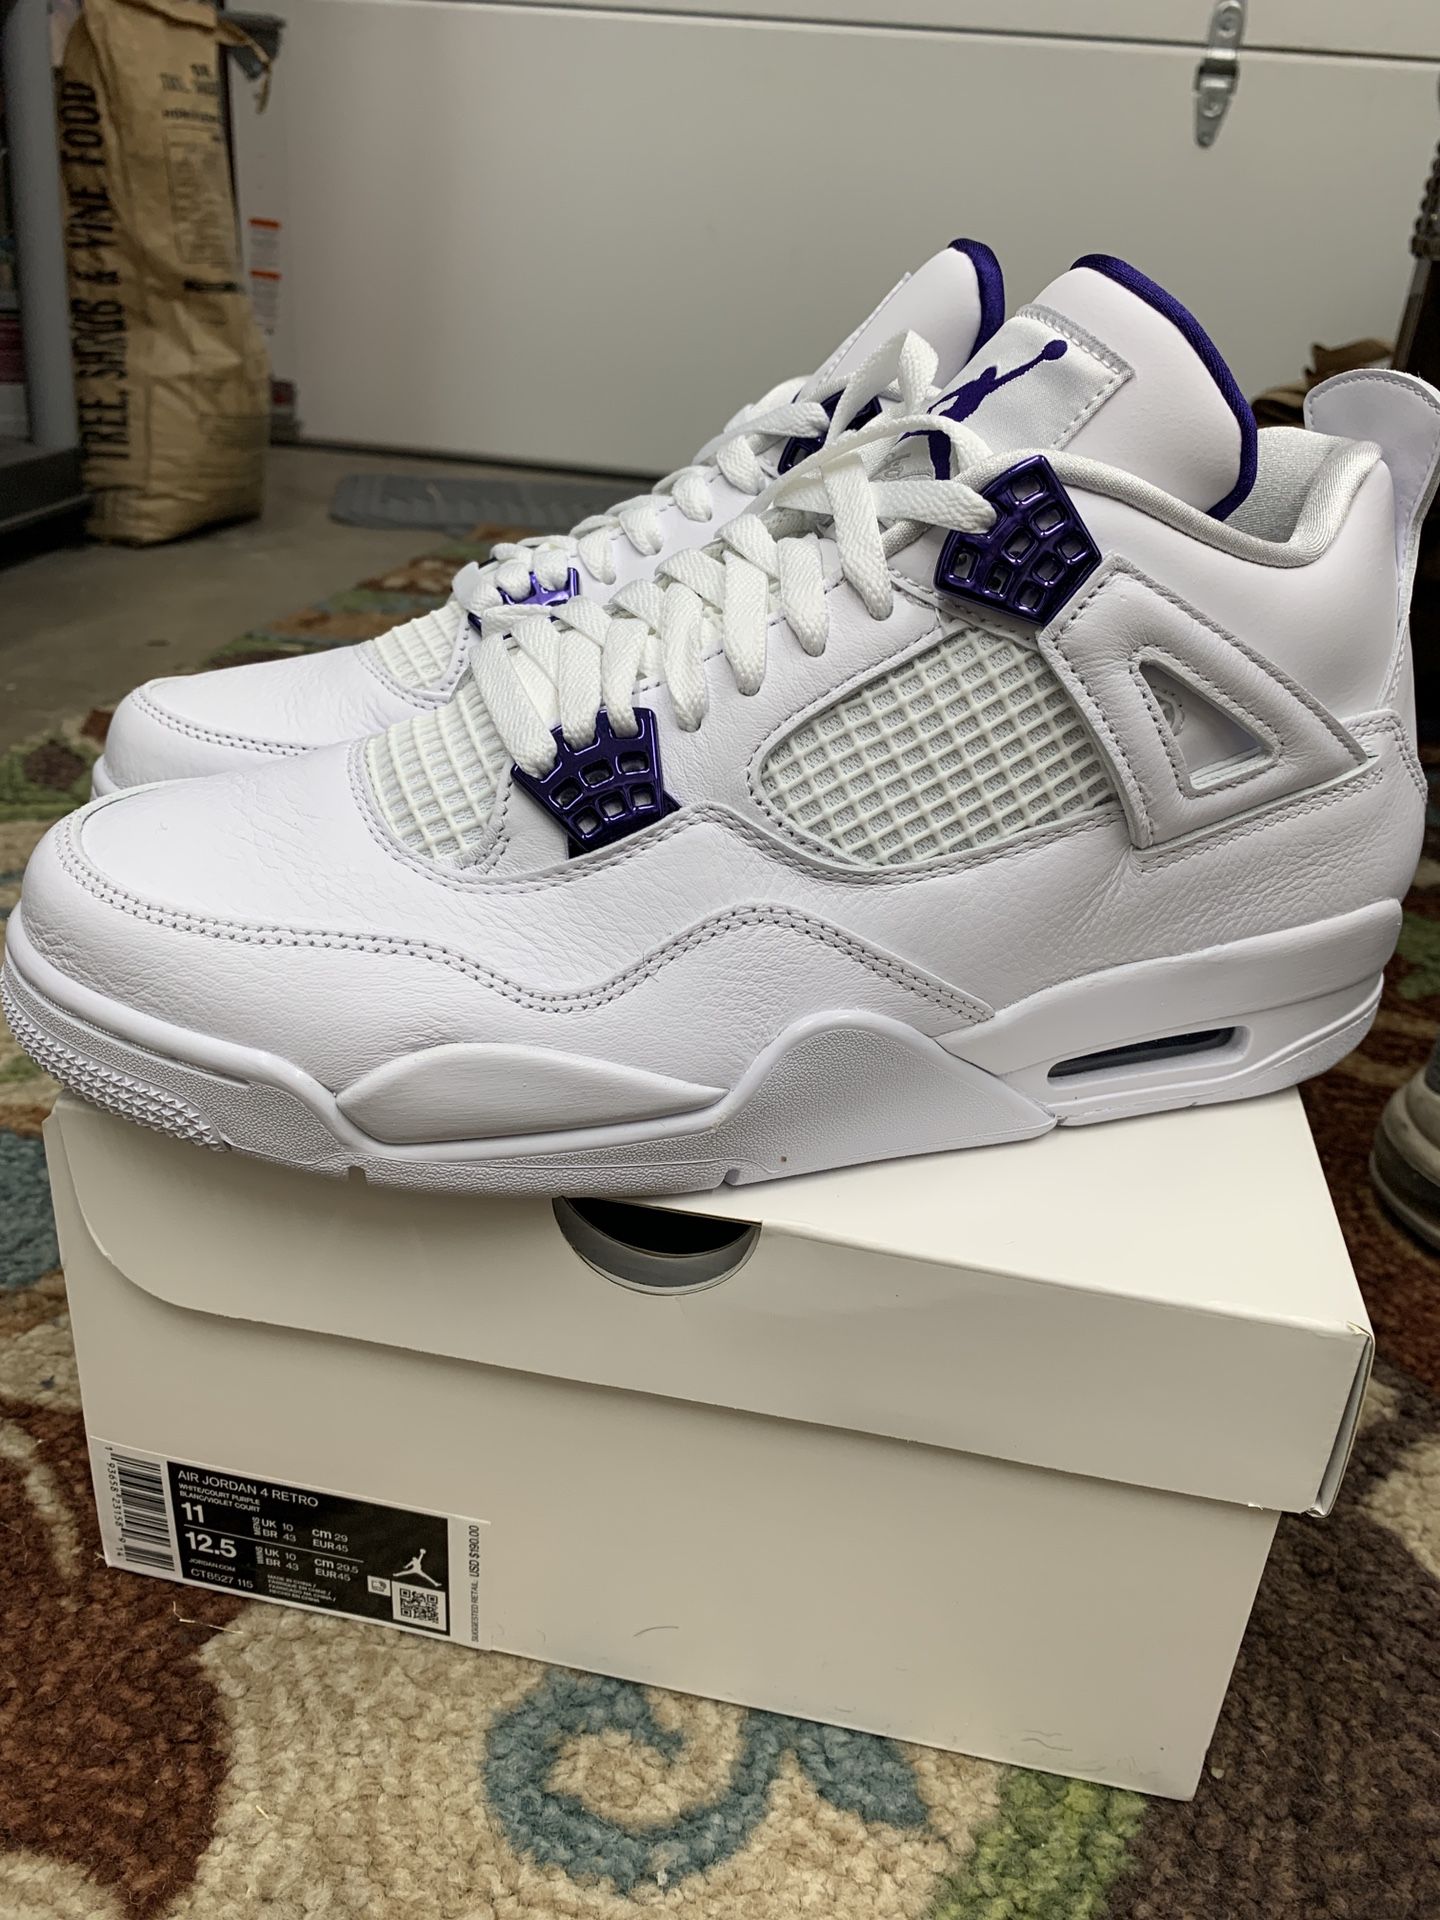 Nike Jordan 4 size 11 Men’s